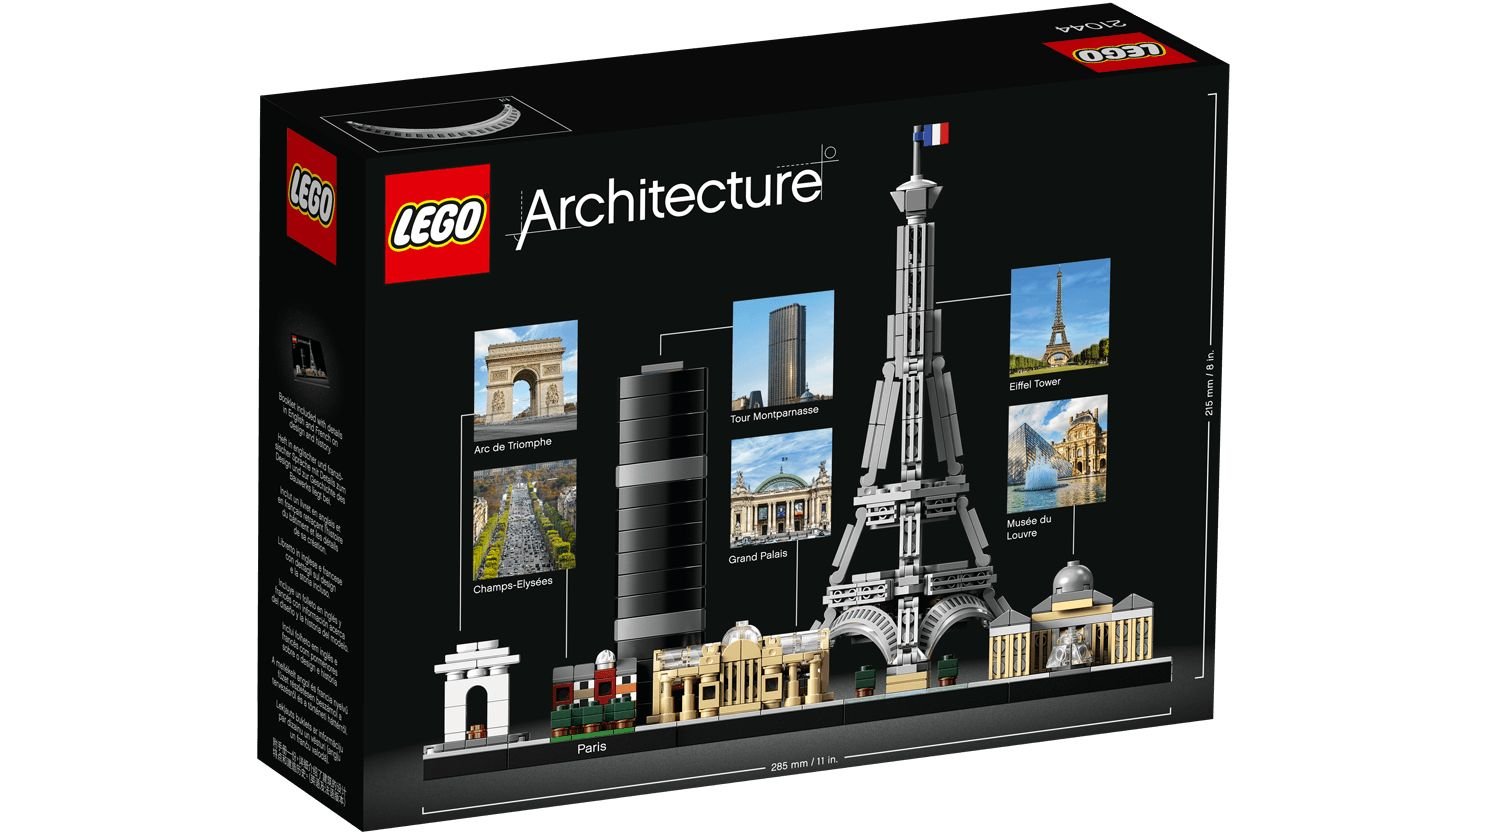 LEGO Architecture 21044 Paris LEGO_21044_Box5_v39_1488.jpg